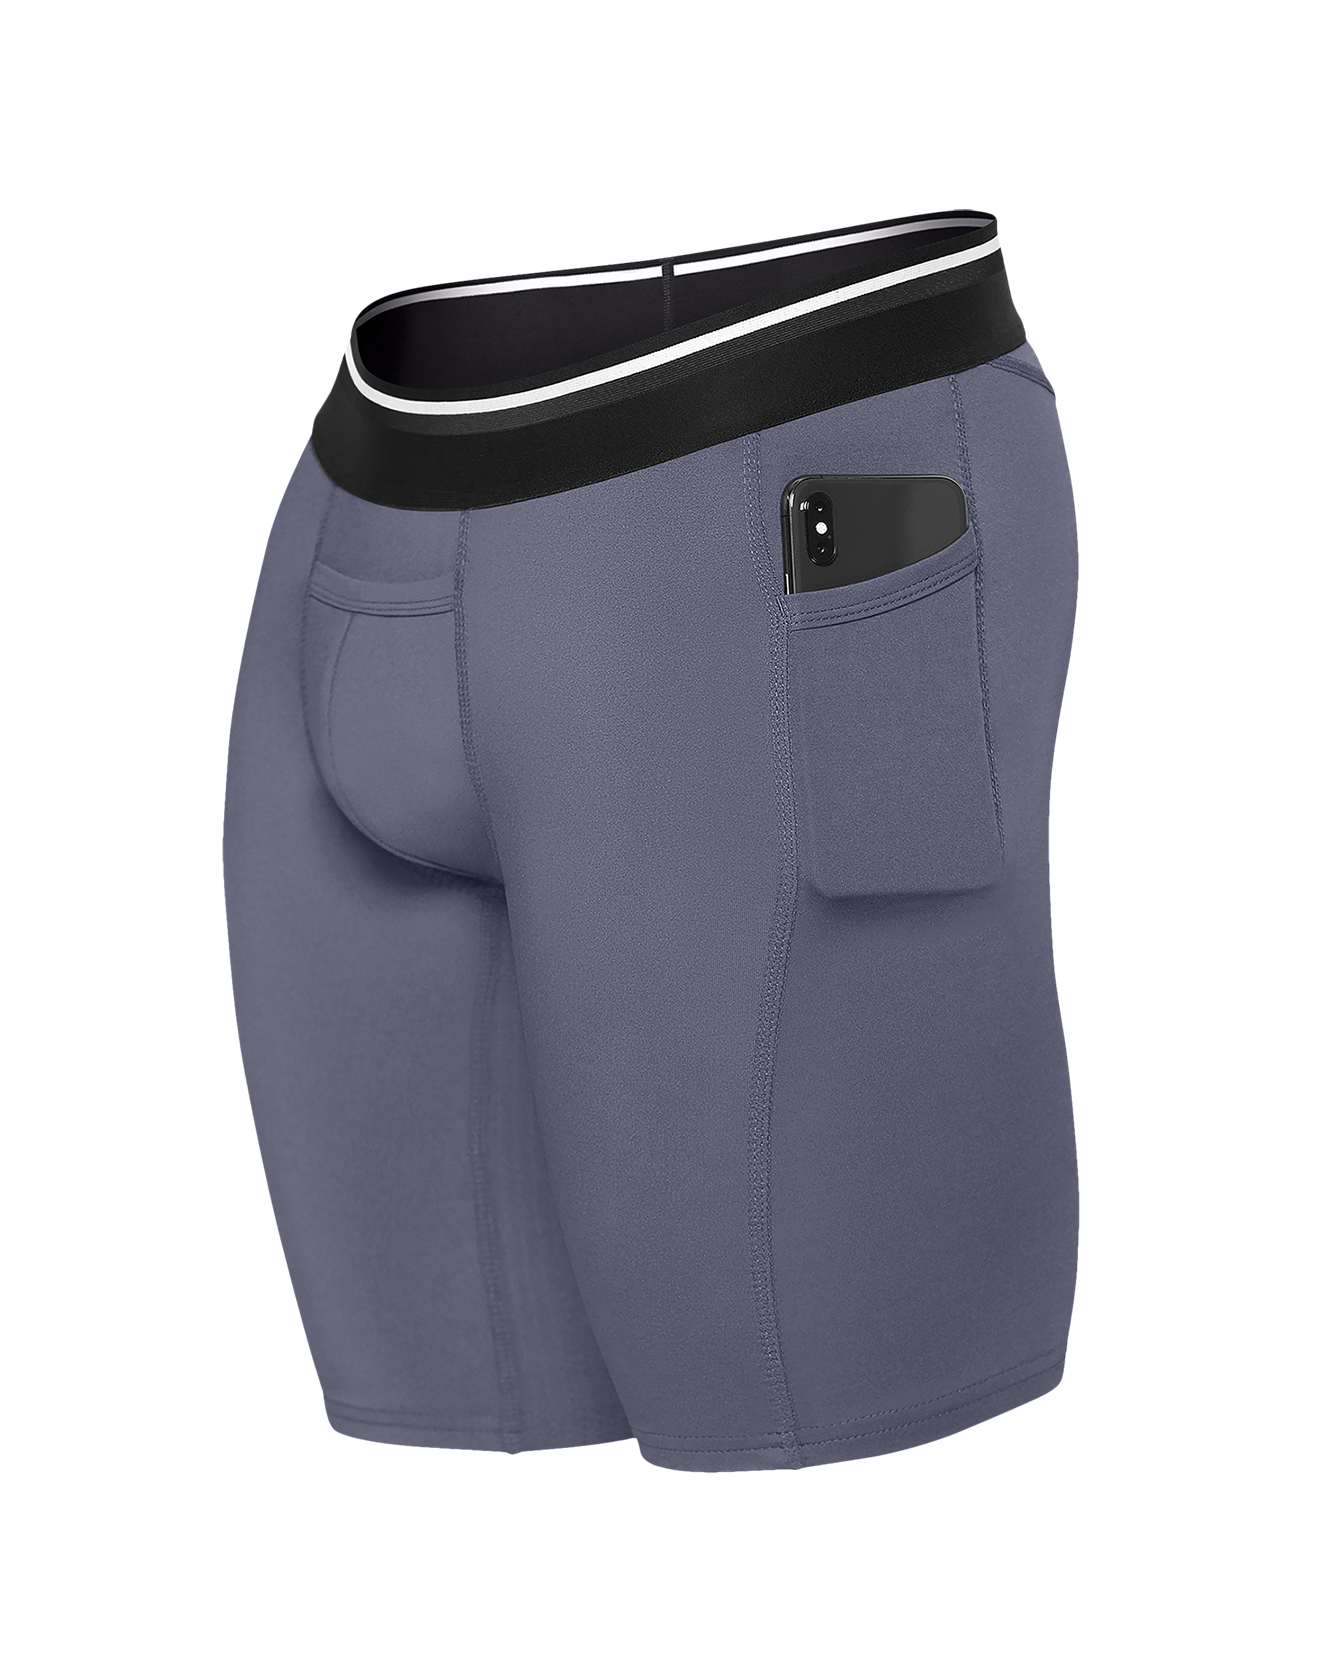 Cathalem All Citizens Underwear Men Fashion Underpants Knickers Ride Up Briefs  Underwear Pant Plane Underwear Underpants Grey Large 